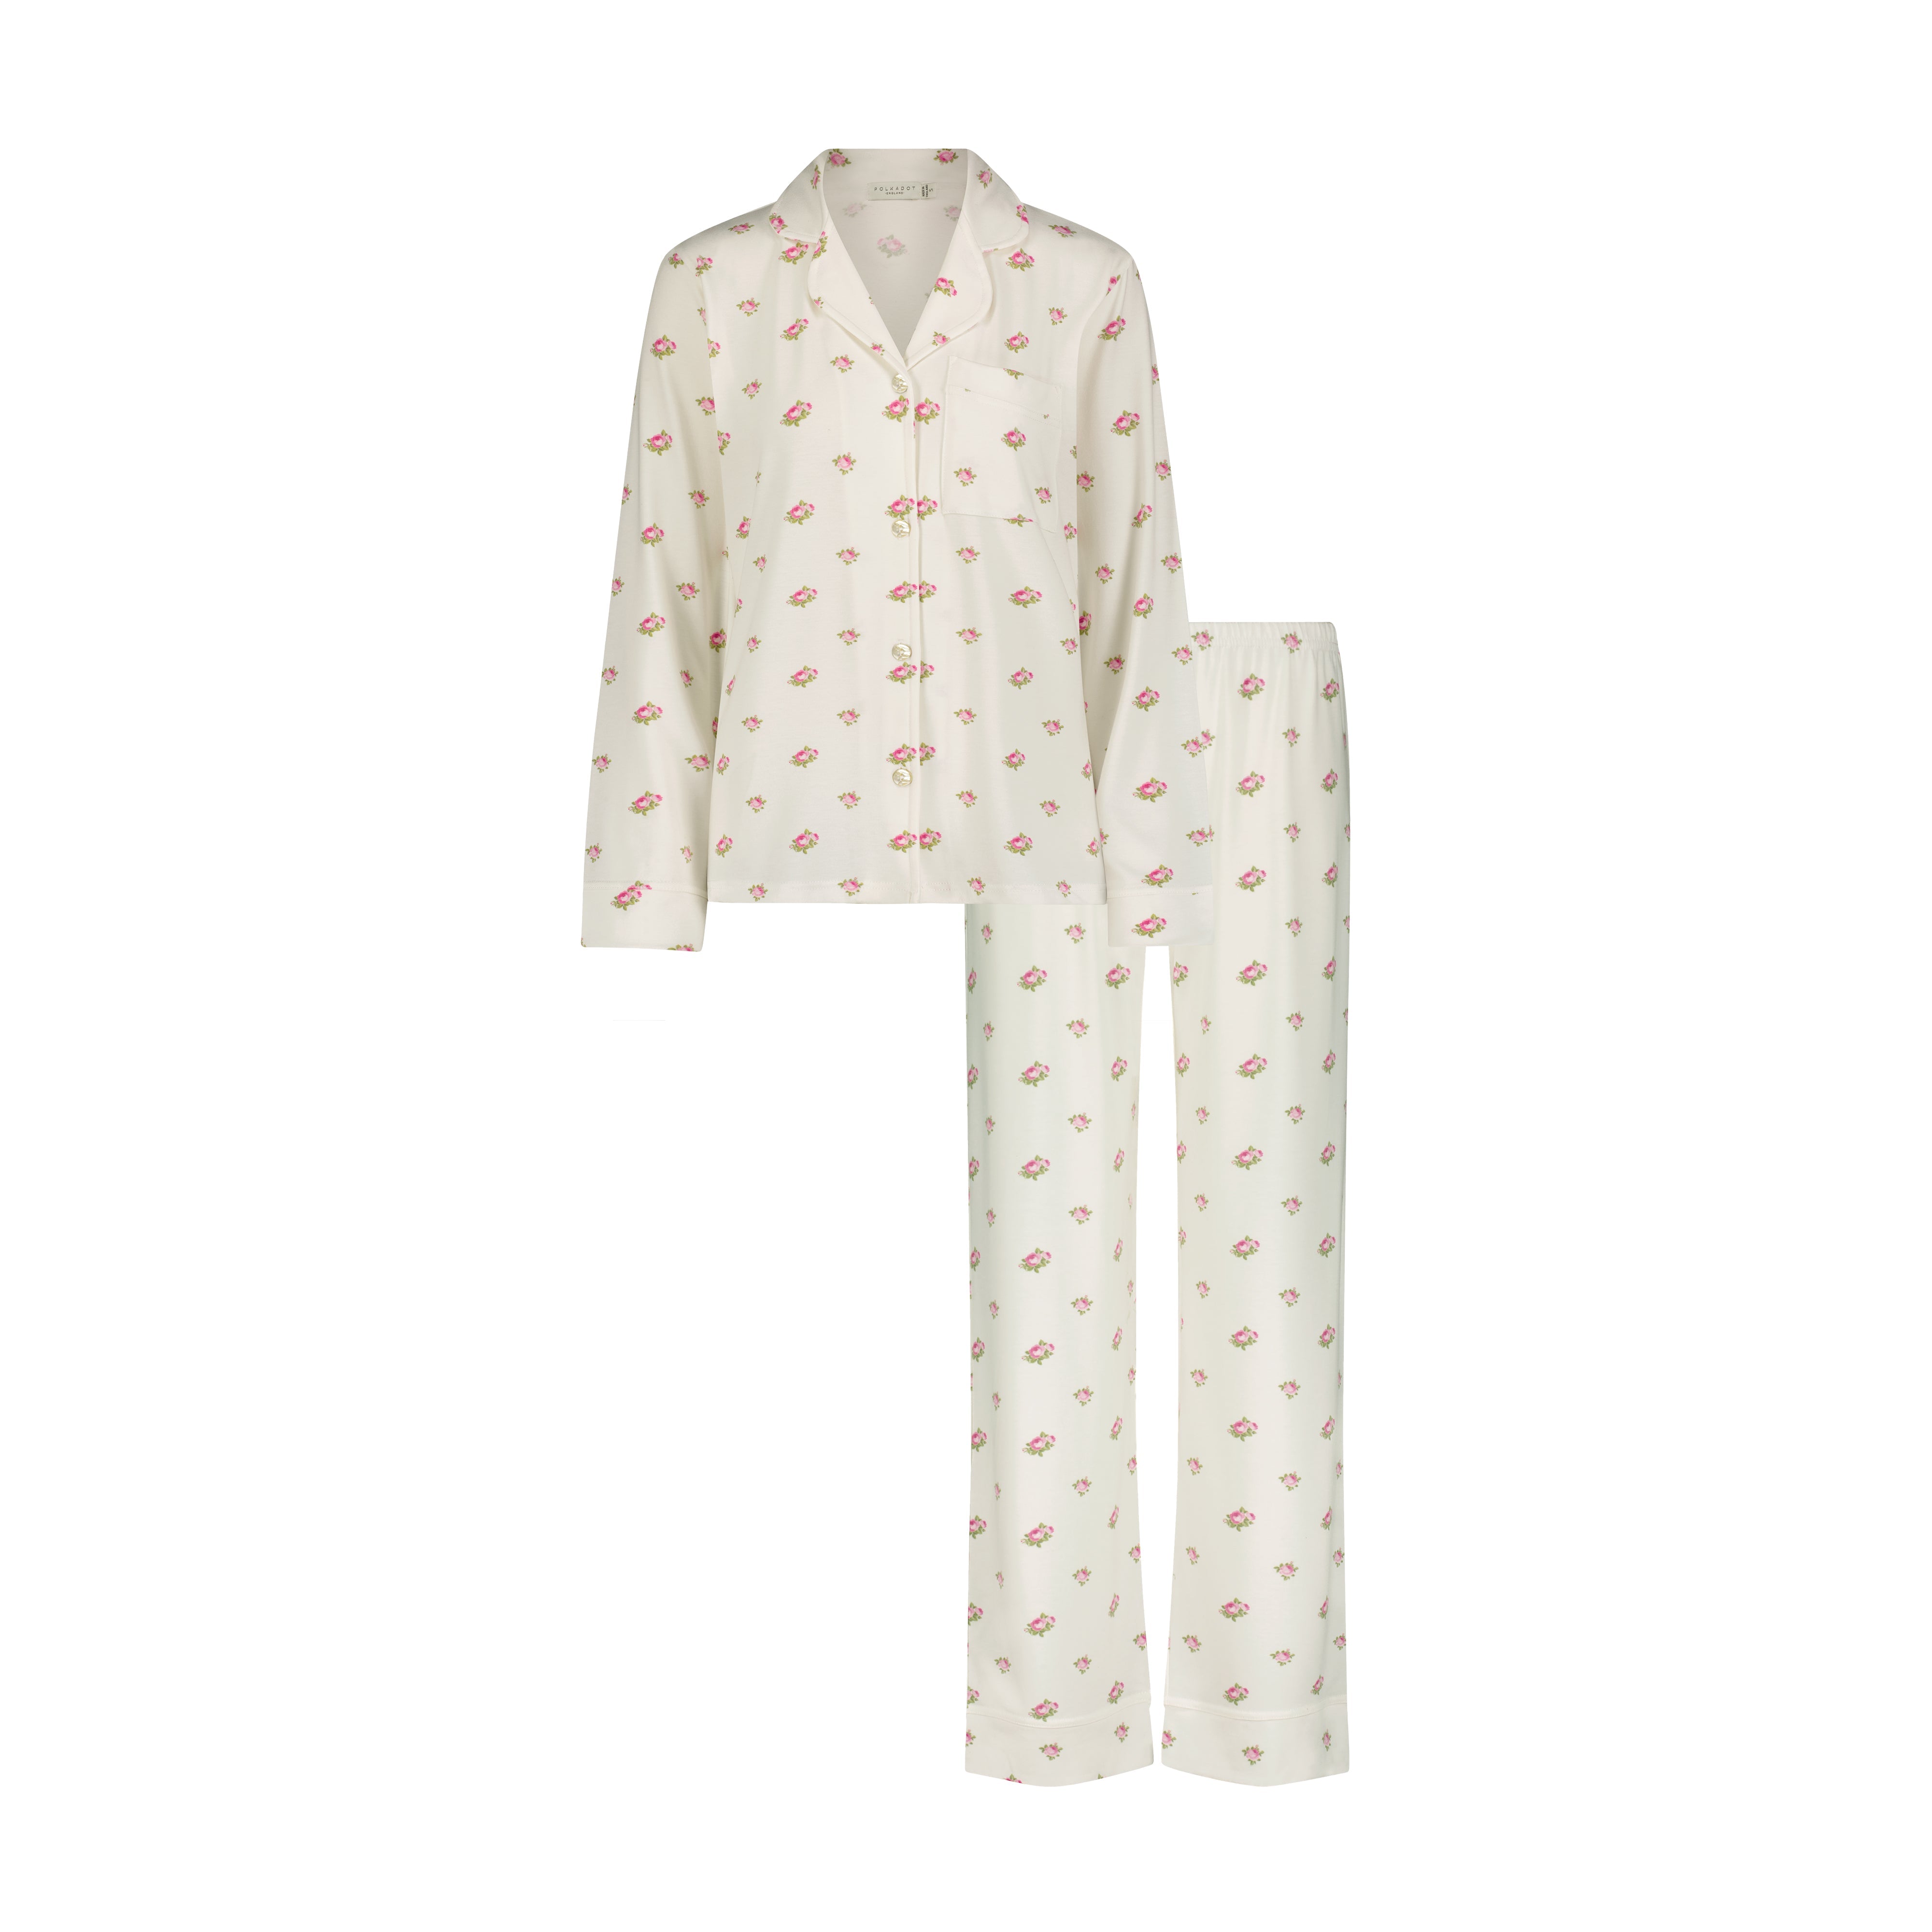 CHARLEY Pajama Set in Cream Vintage Rose Print -NEW COLOR